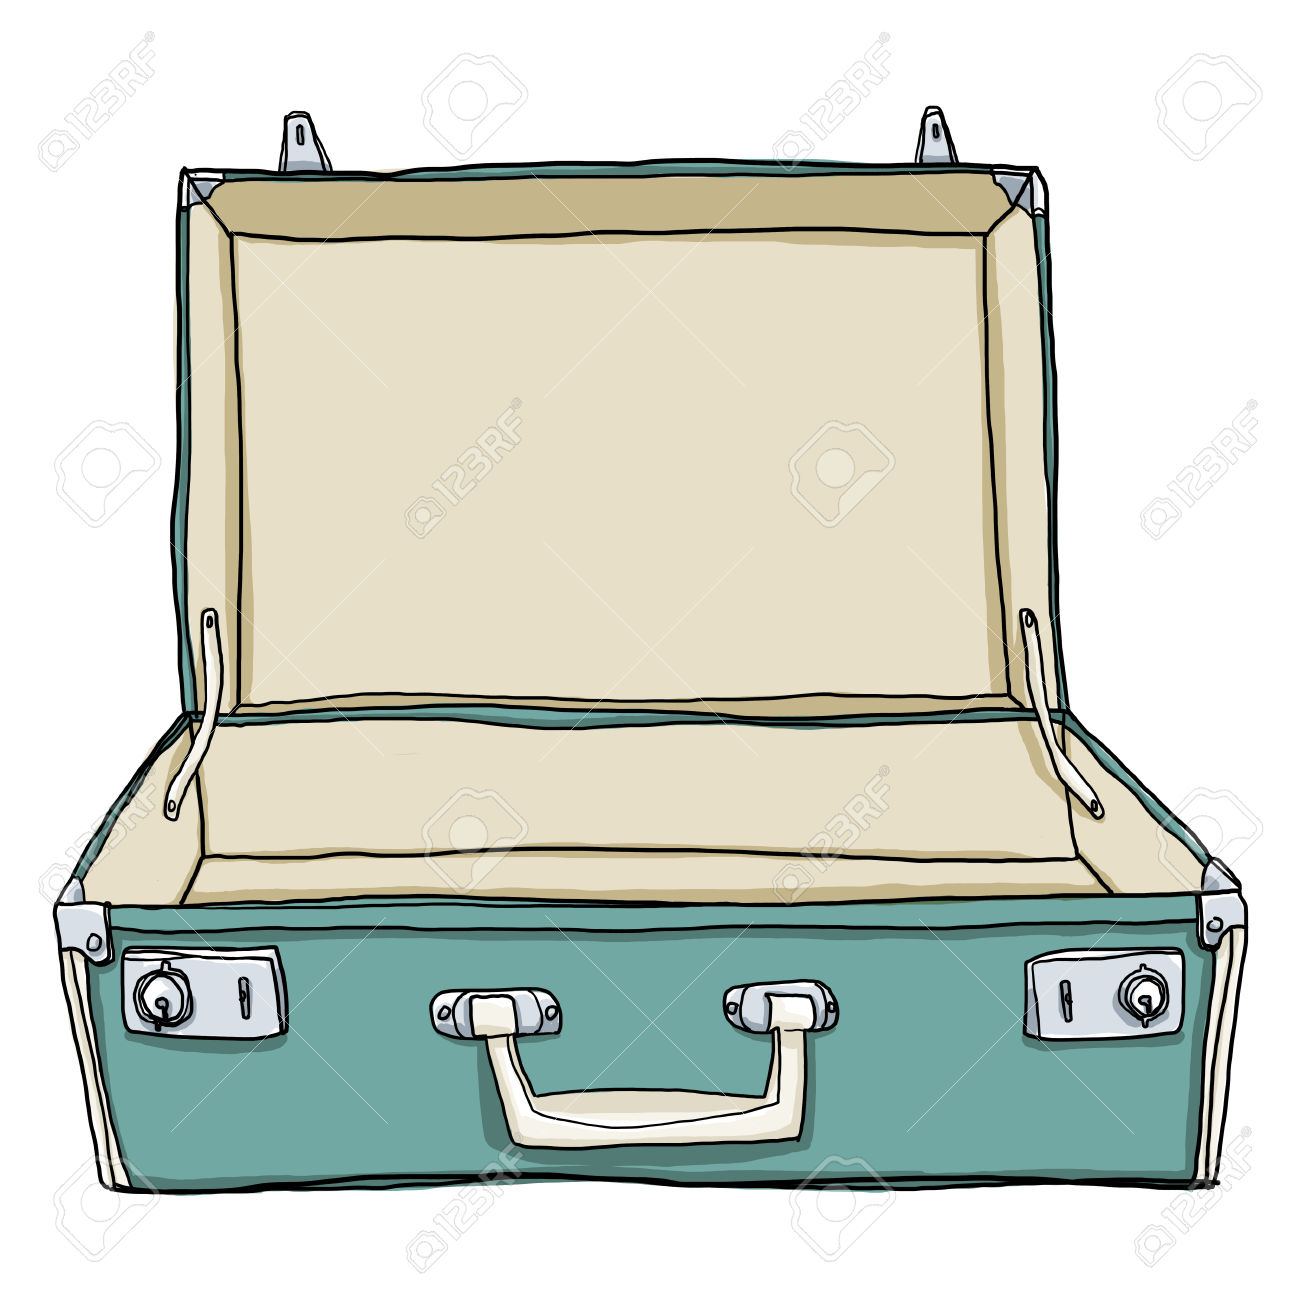 Travel suitcase clipart.